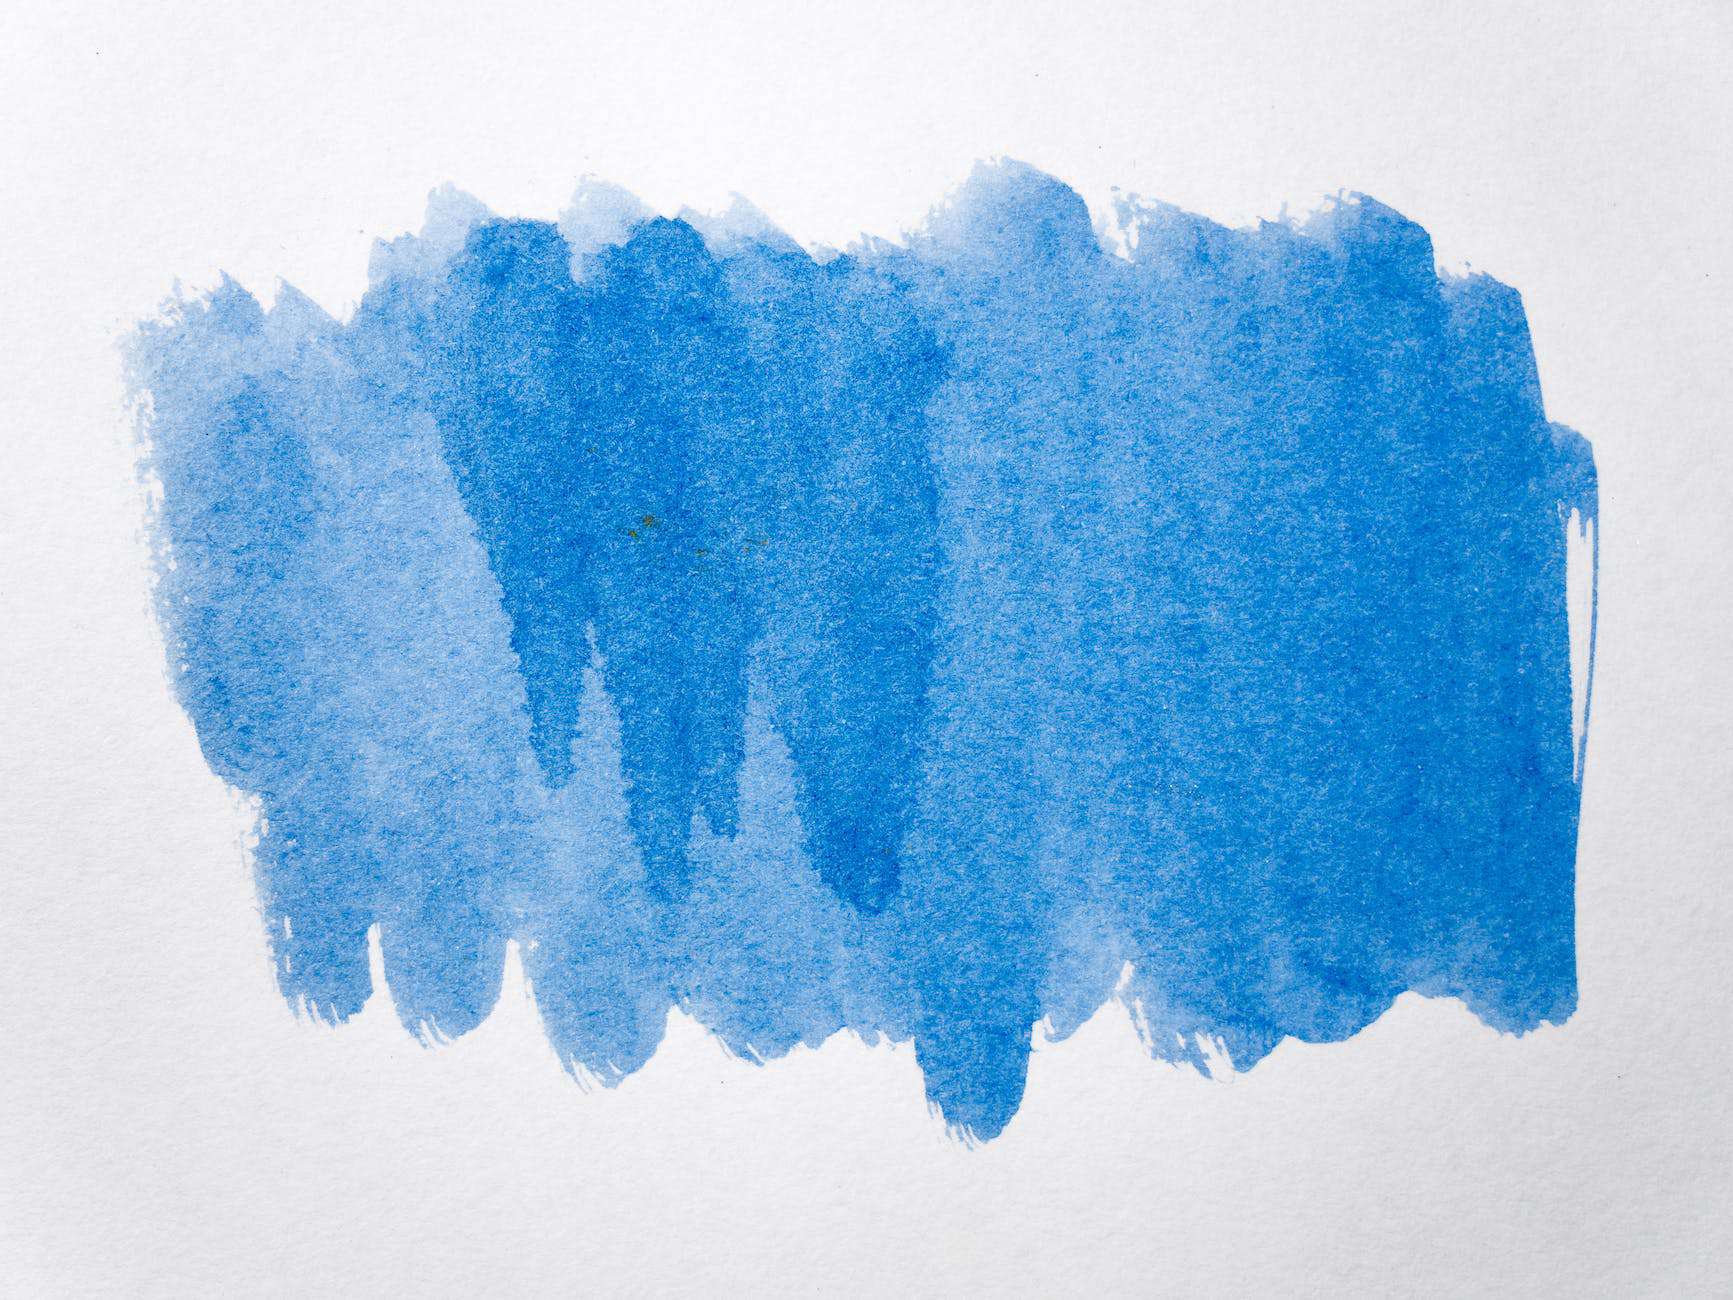 blue paint on a paper